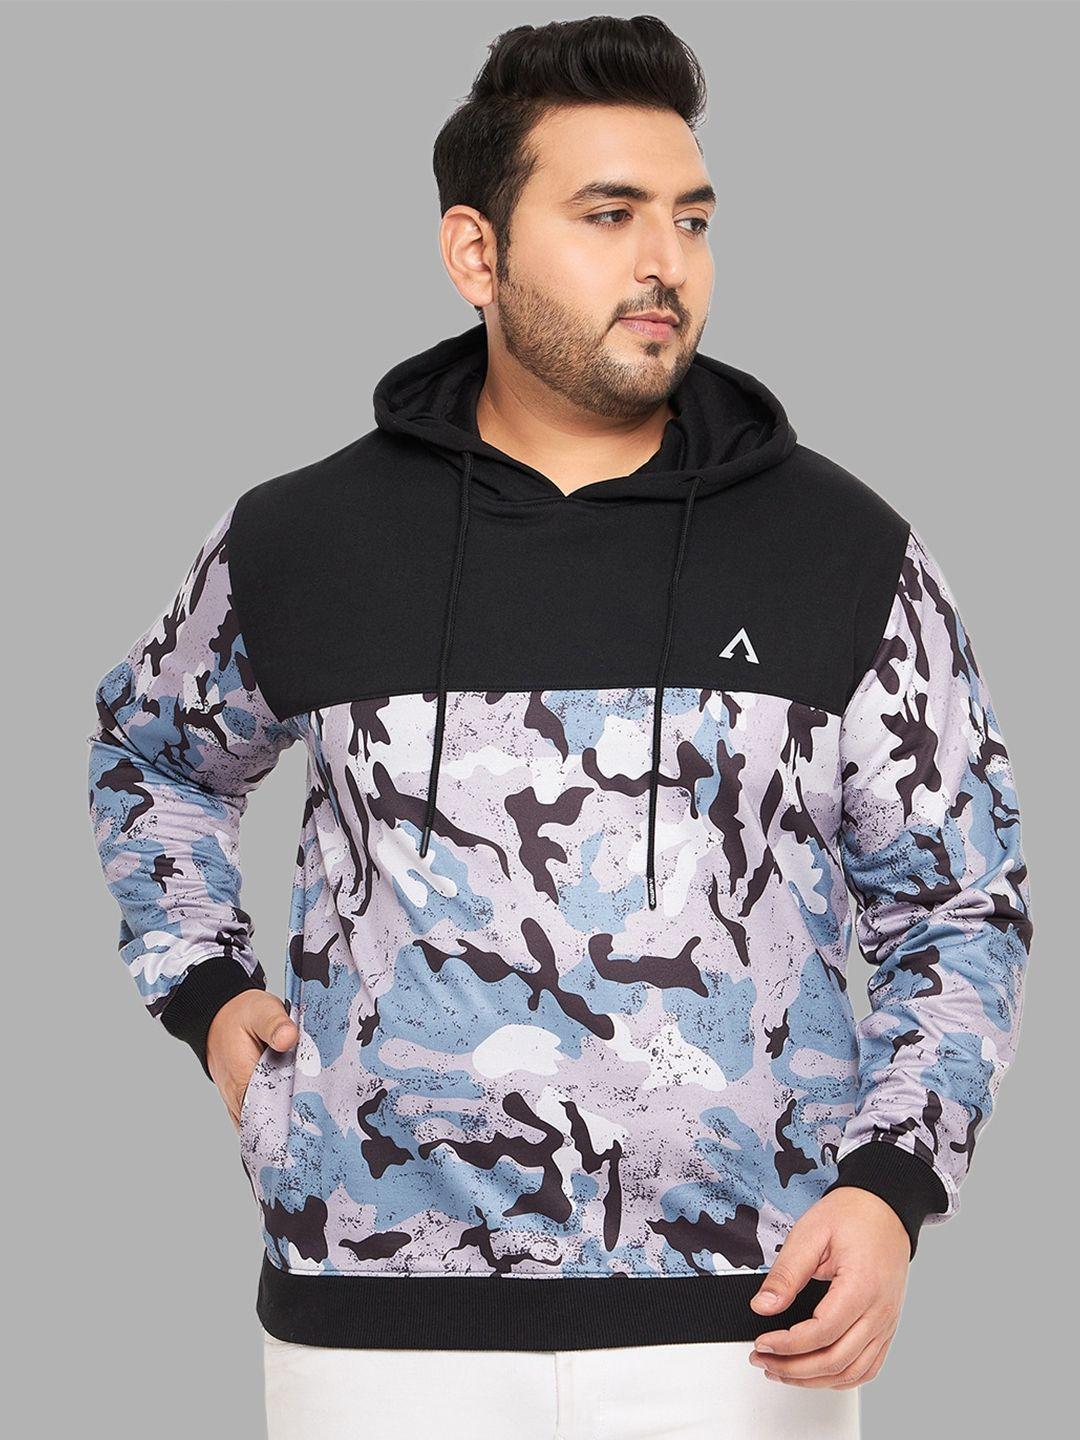 austivo-plus-size-abstract-printed-fleece-hooded-pullover-sweatshirt